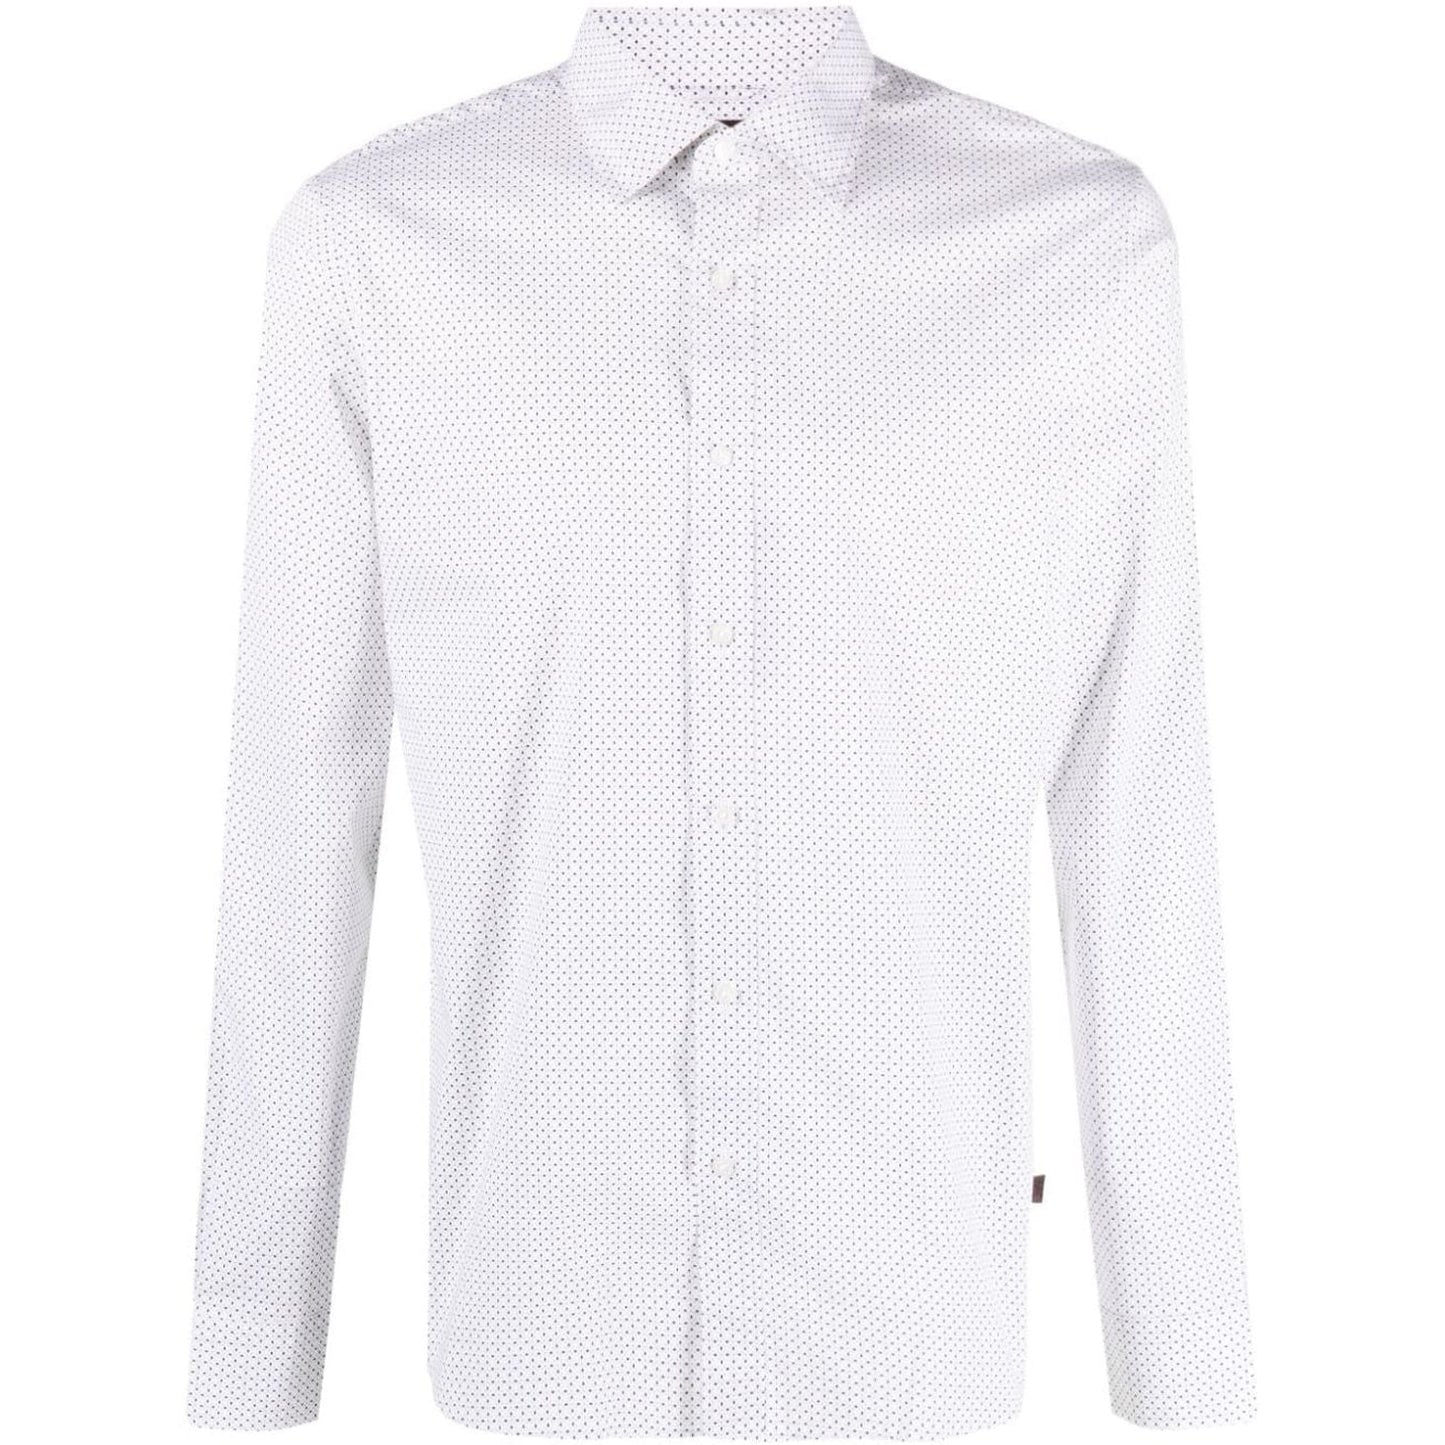 MICHAEL KORS vyriški balti marškiniai Ls spread mosaic star shirt